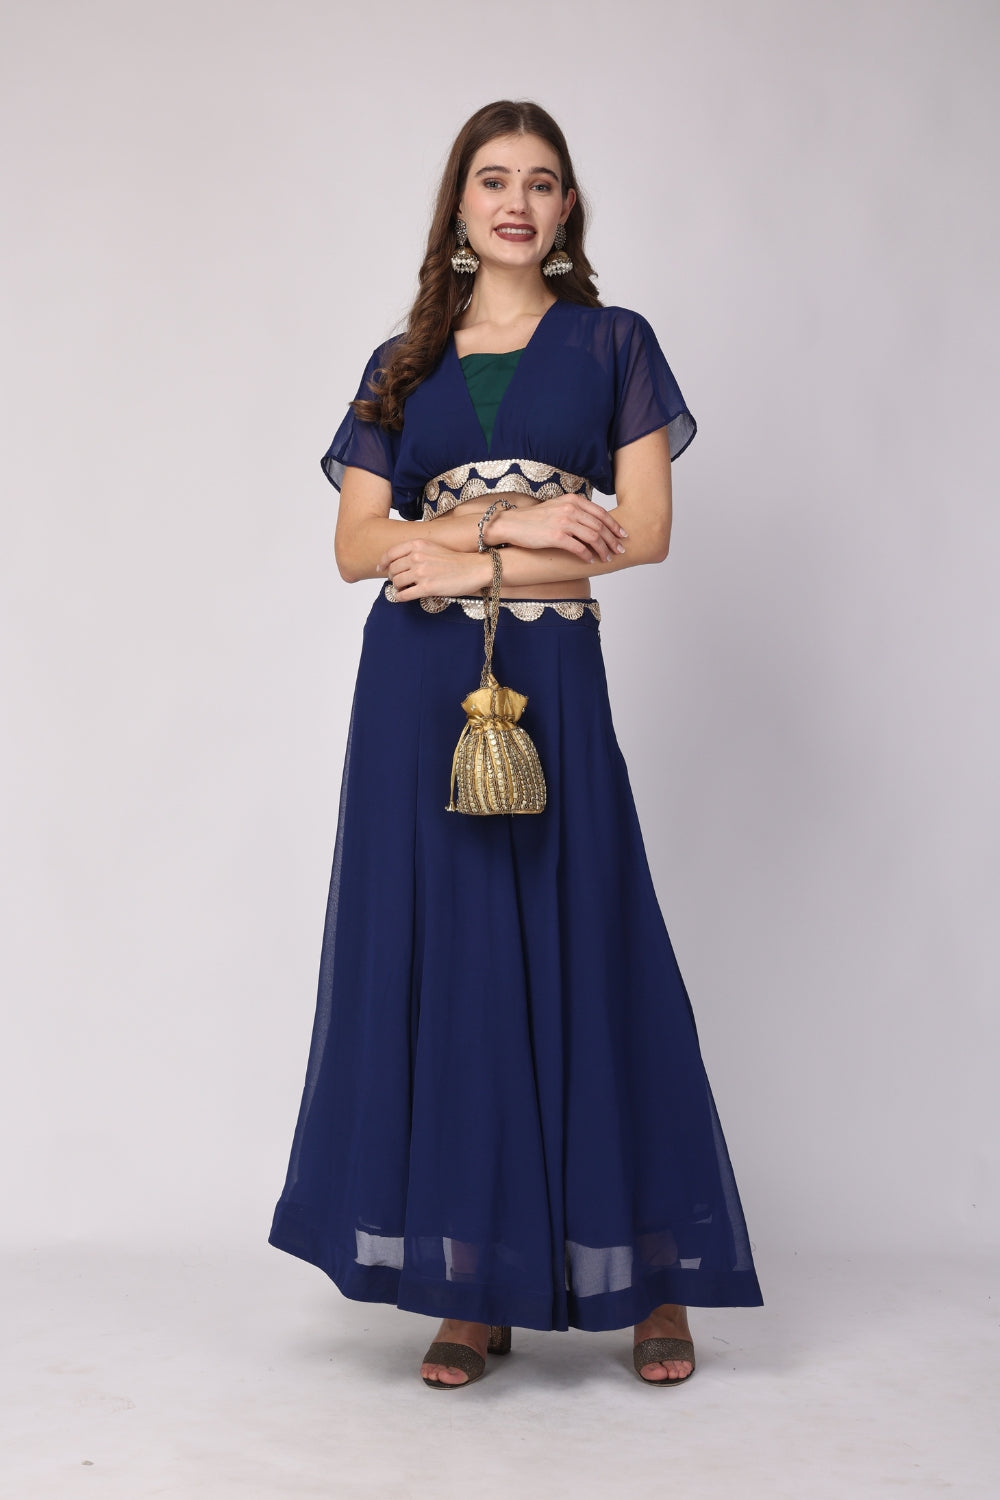 Dazzling Floral Printed Black Lehenga Skirt With Velvet Blouse at Rs  4399.00 | Printed Lehenga | ID: 2849566683612